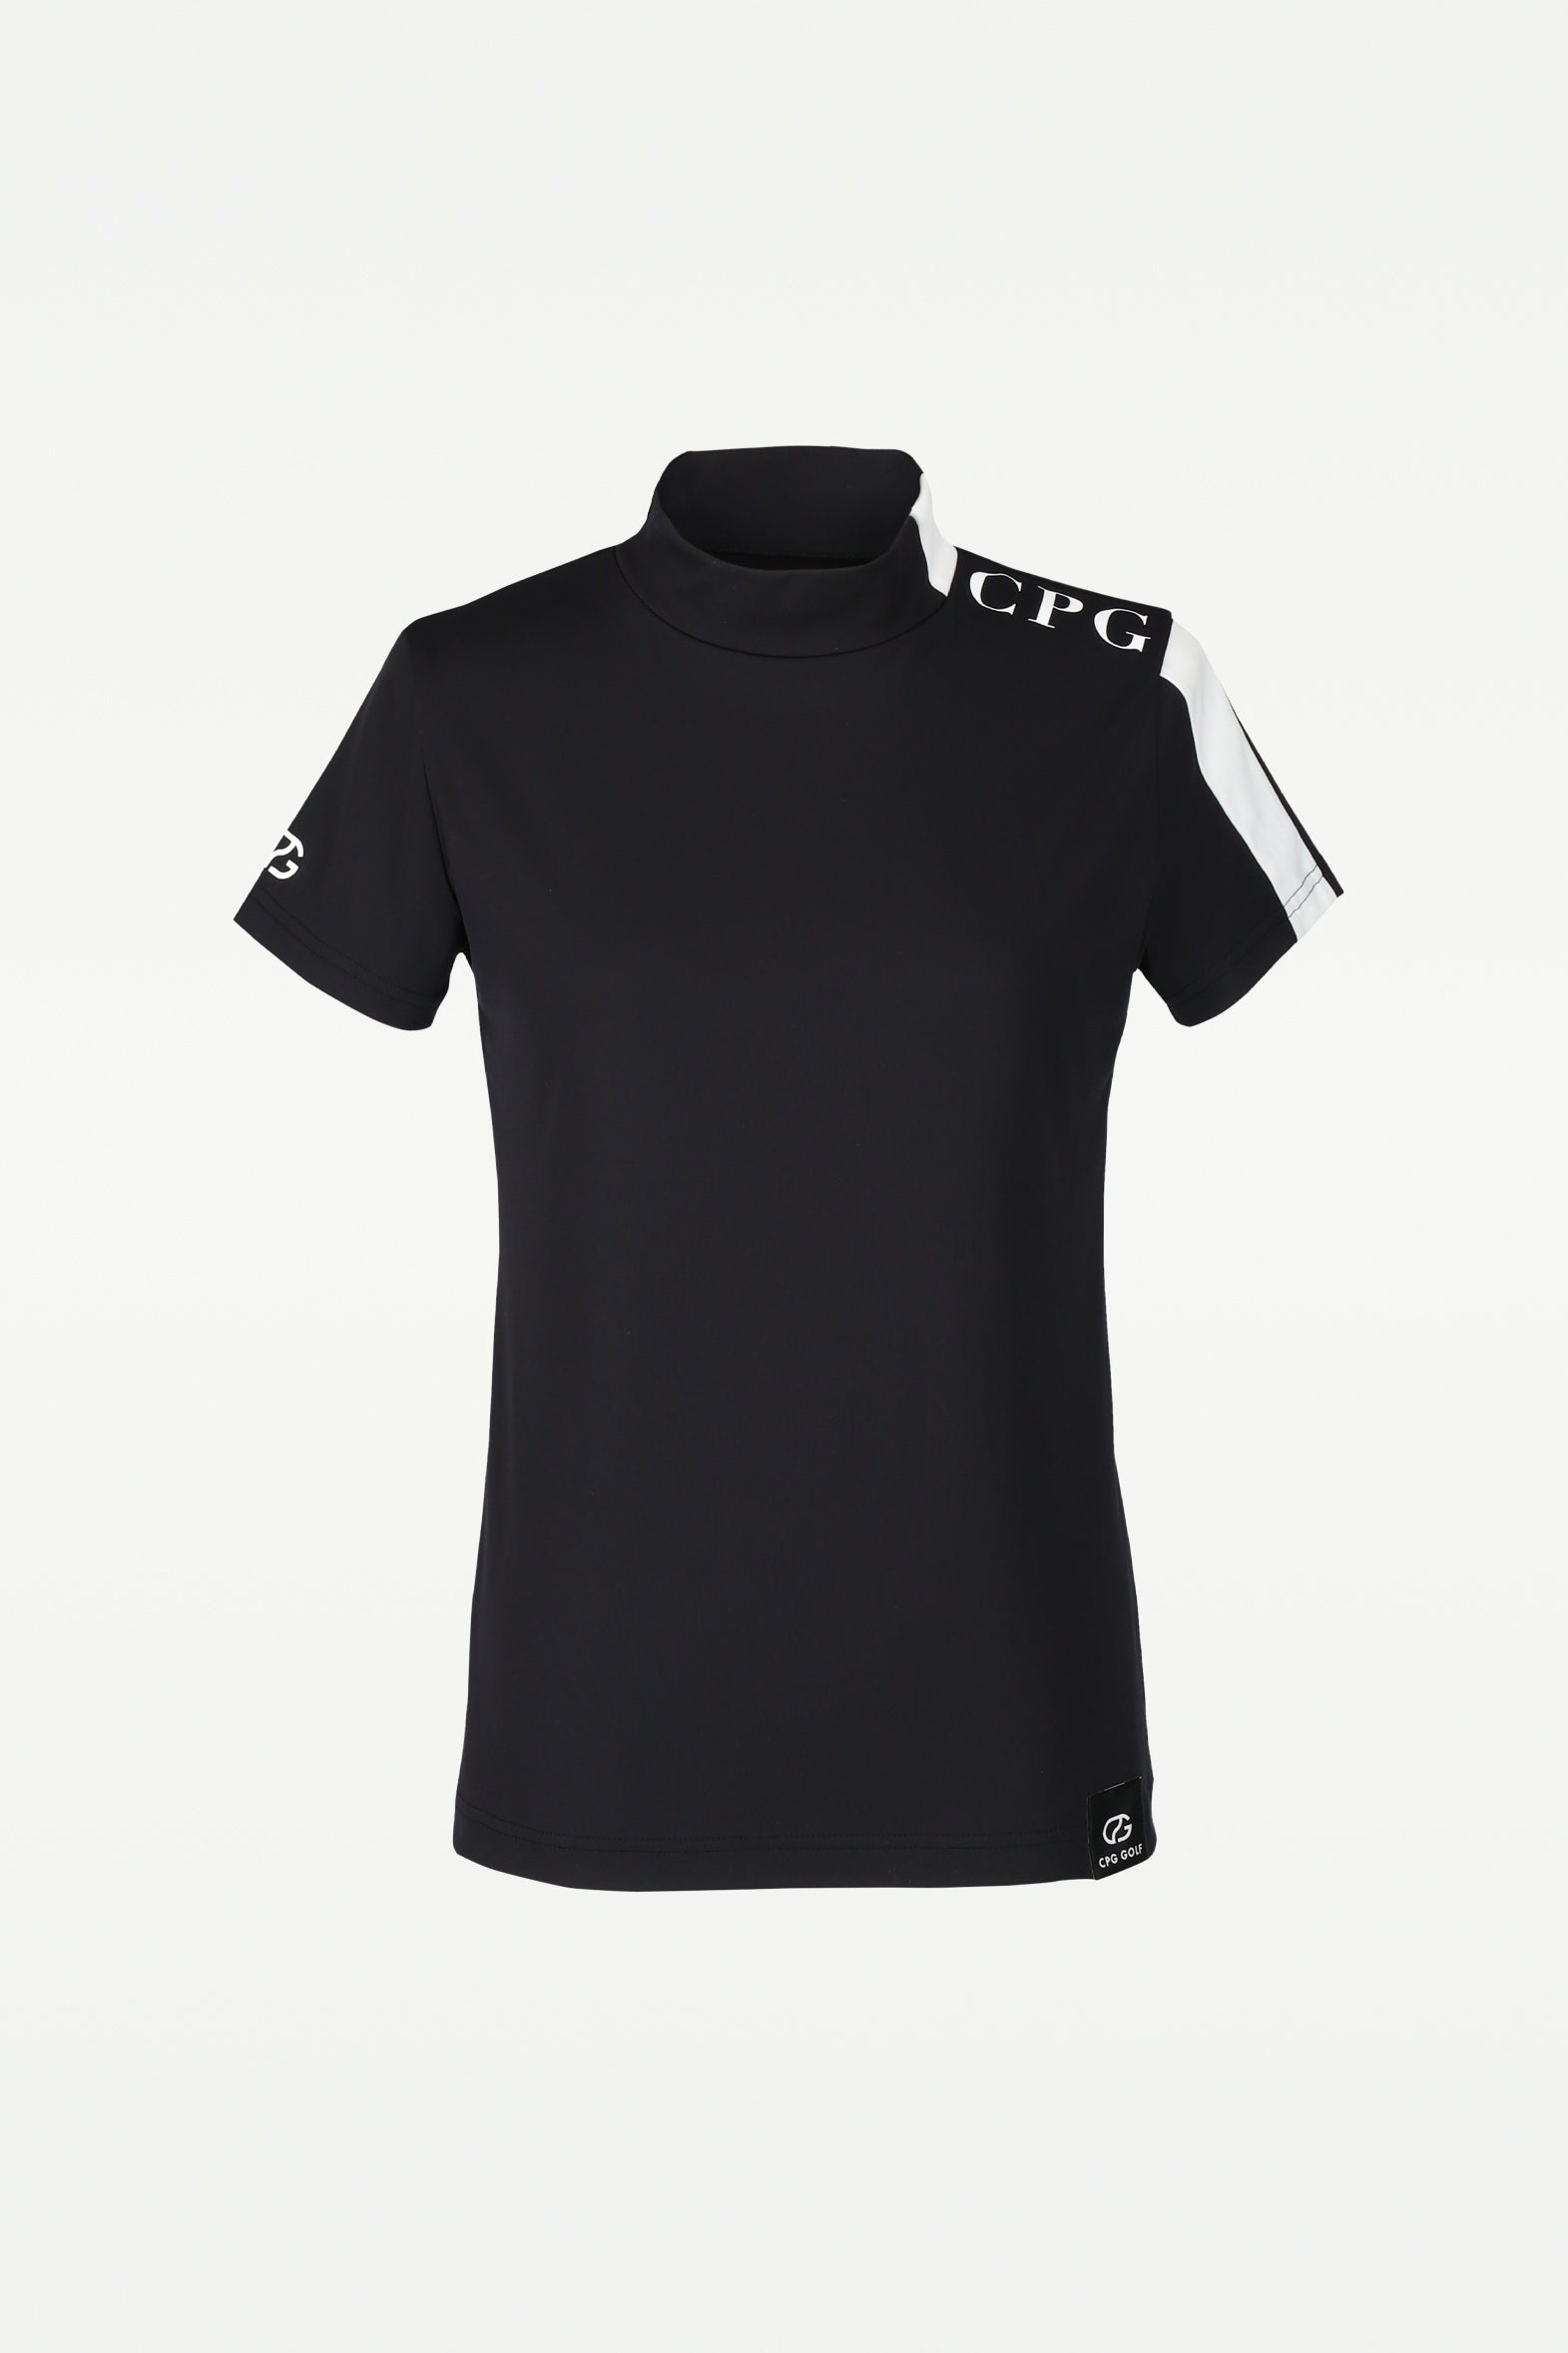 CPG GOLF シーピージーゴルフ ゴルフウェア レディース Tシャツ 半袖 